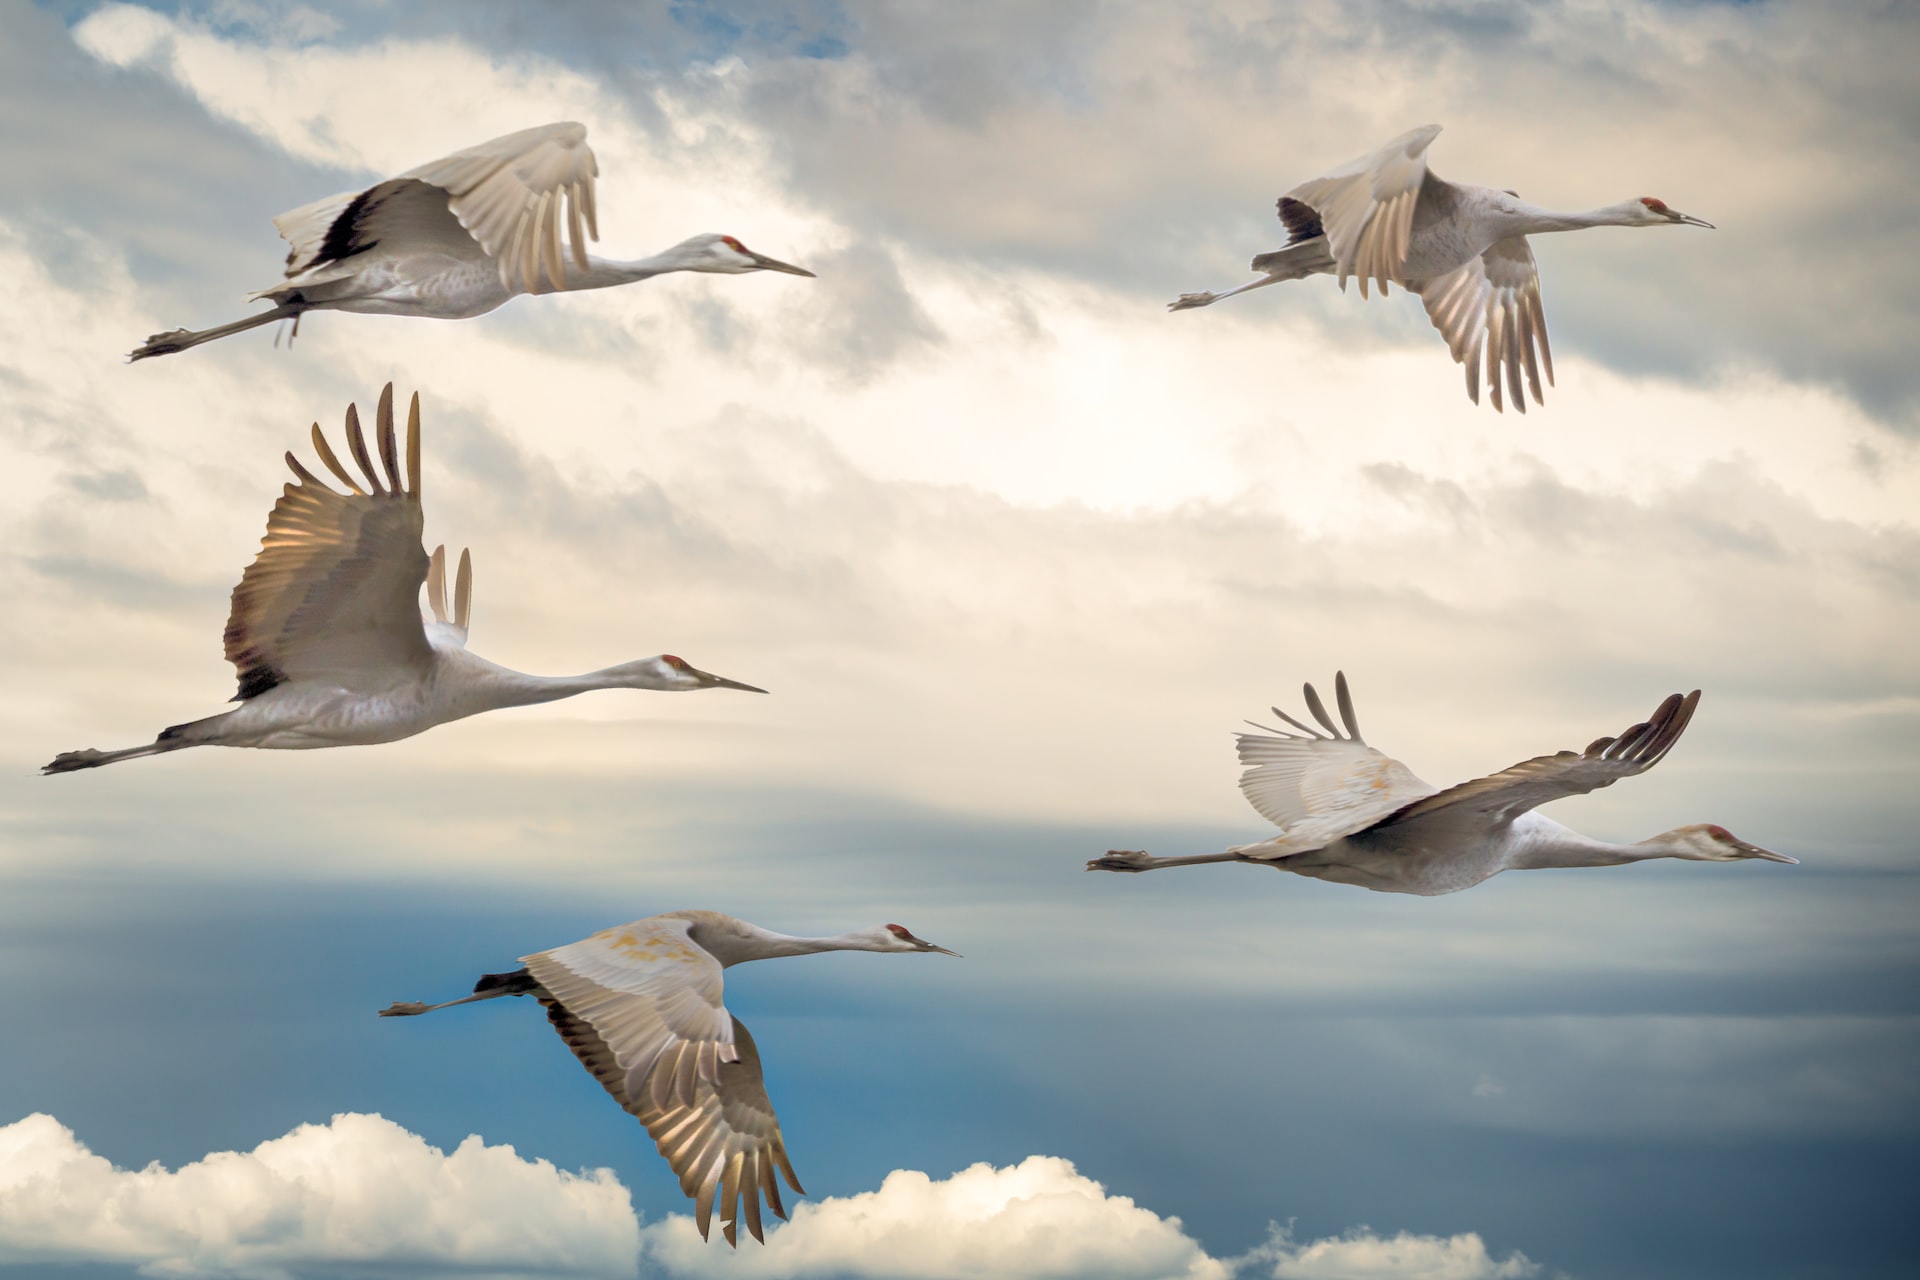 Sandhill Cranes against a cloudy sky